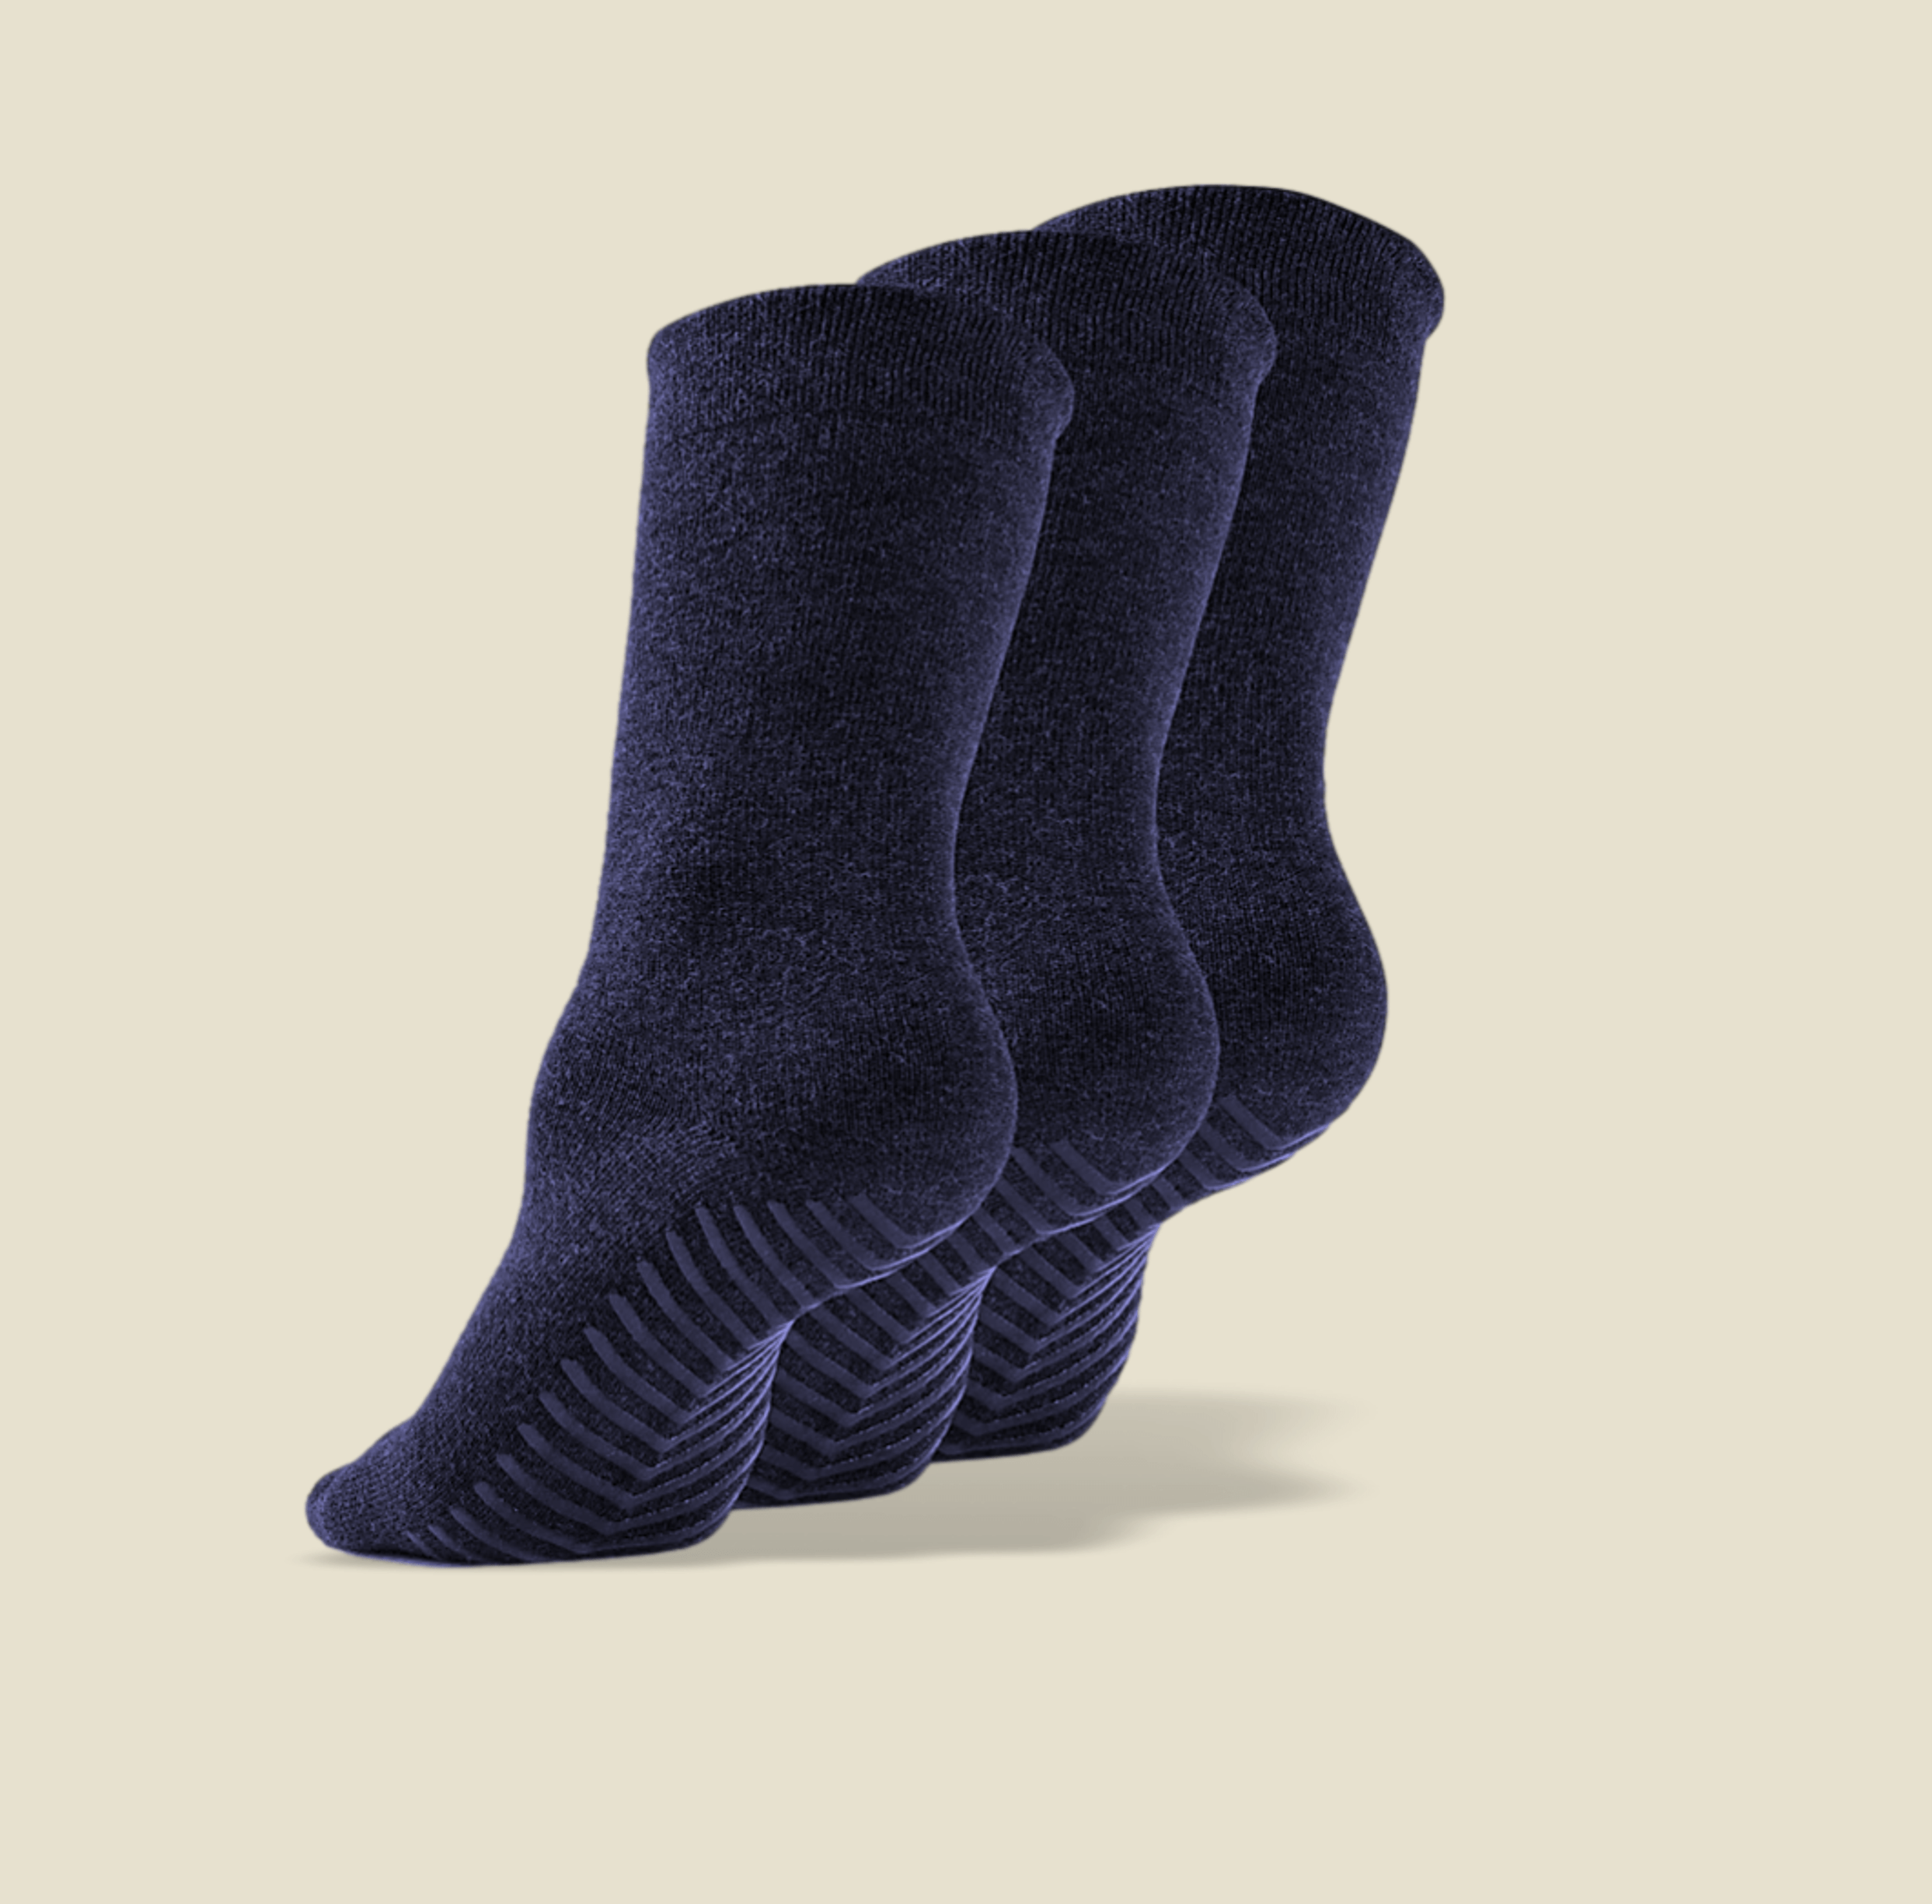 Blue/Black/Grey Grip Socks for Toddlers & Kids - 4 pairs